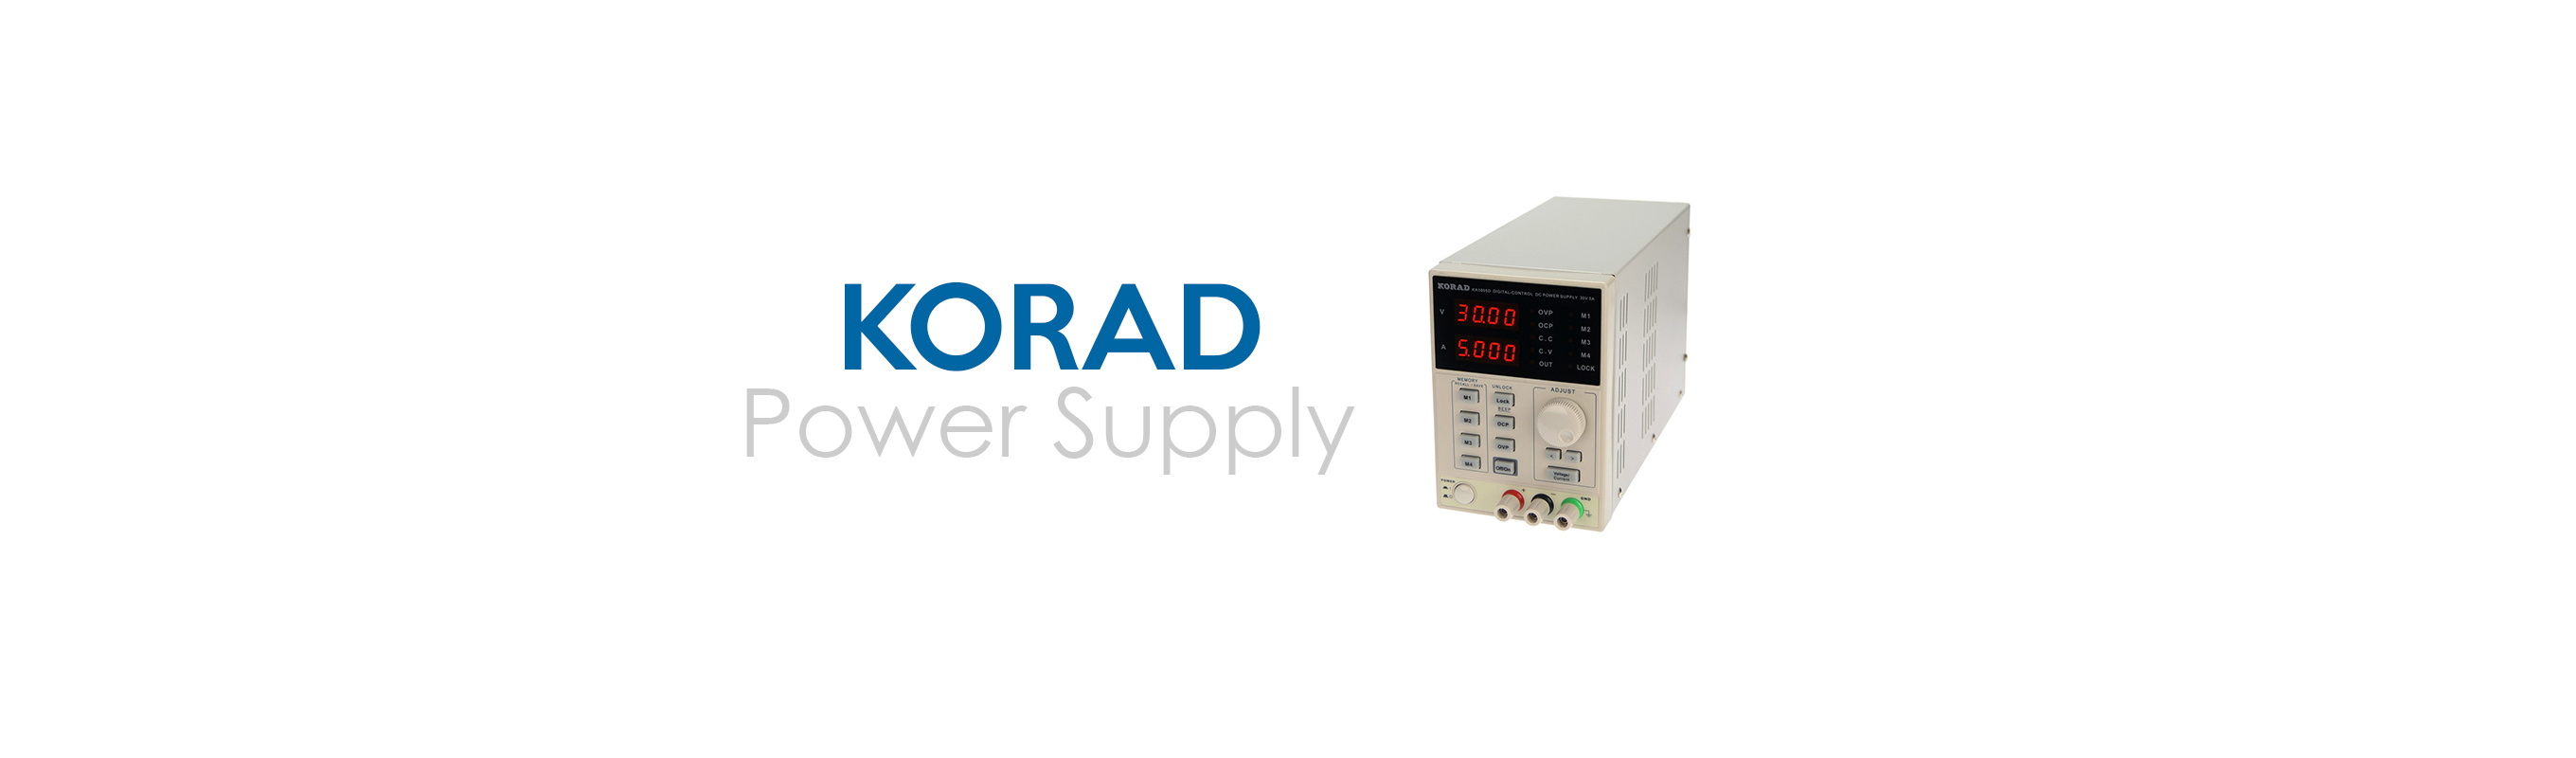 Korad Power Supply